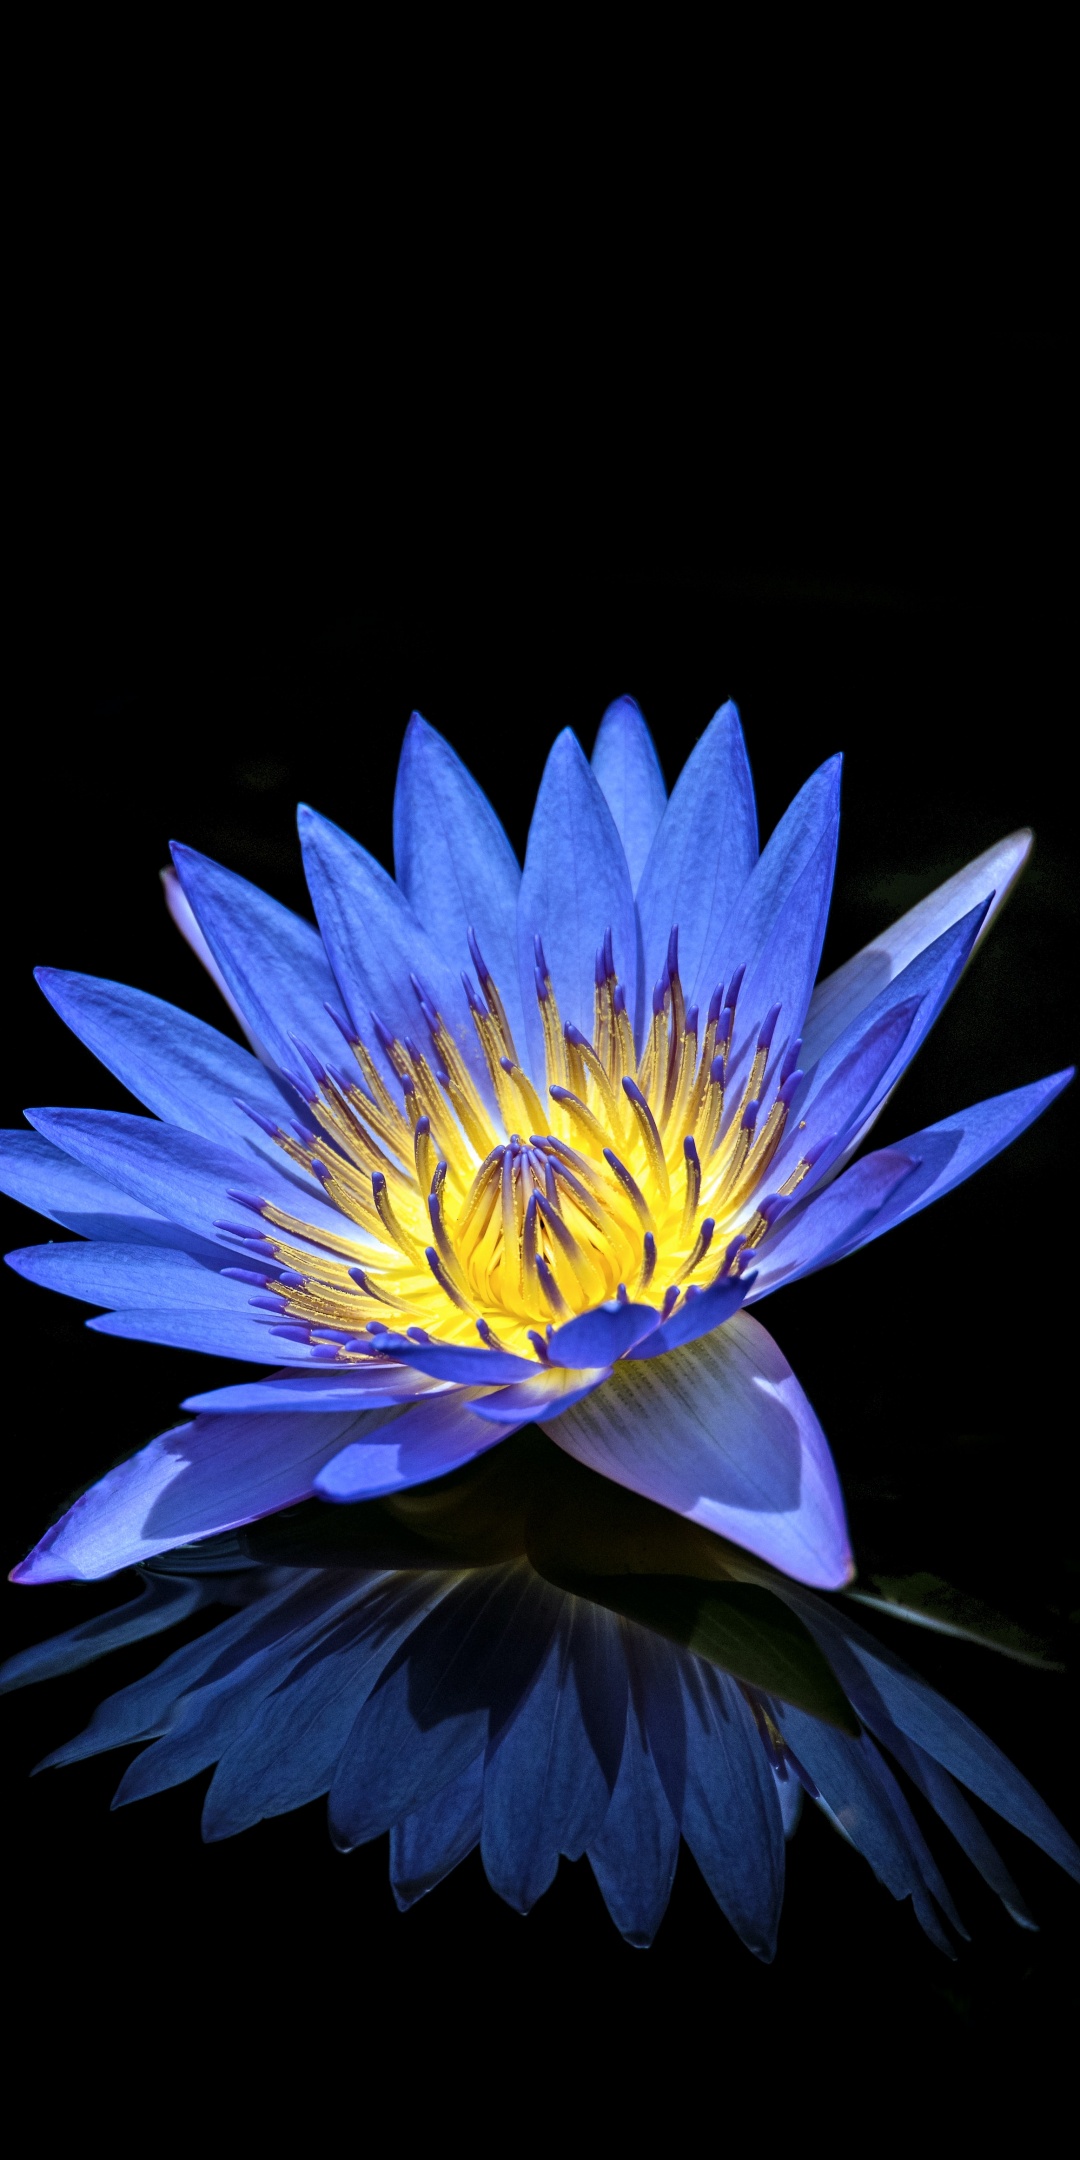 Water Lilly 4K Wallpaper, Blue Flower, Black Background, Reflection, 5K